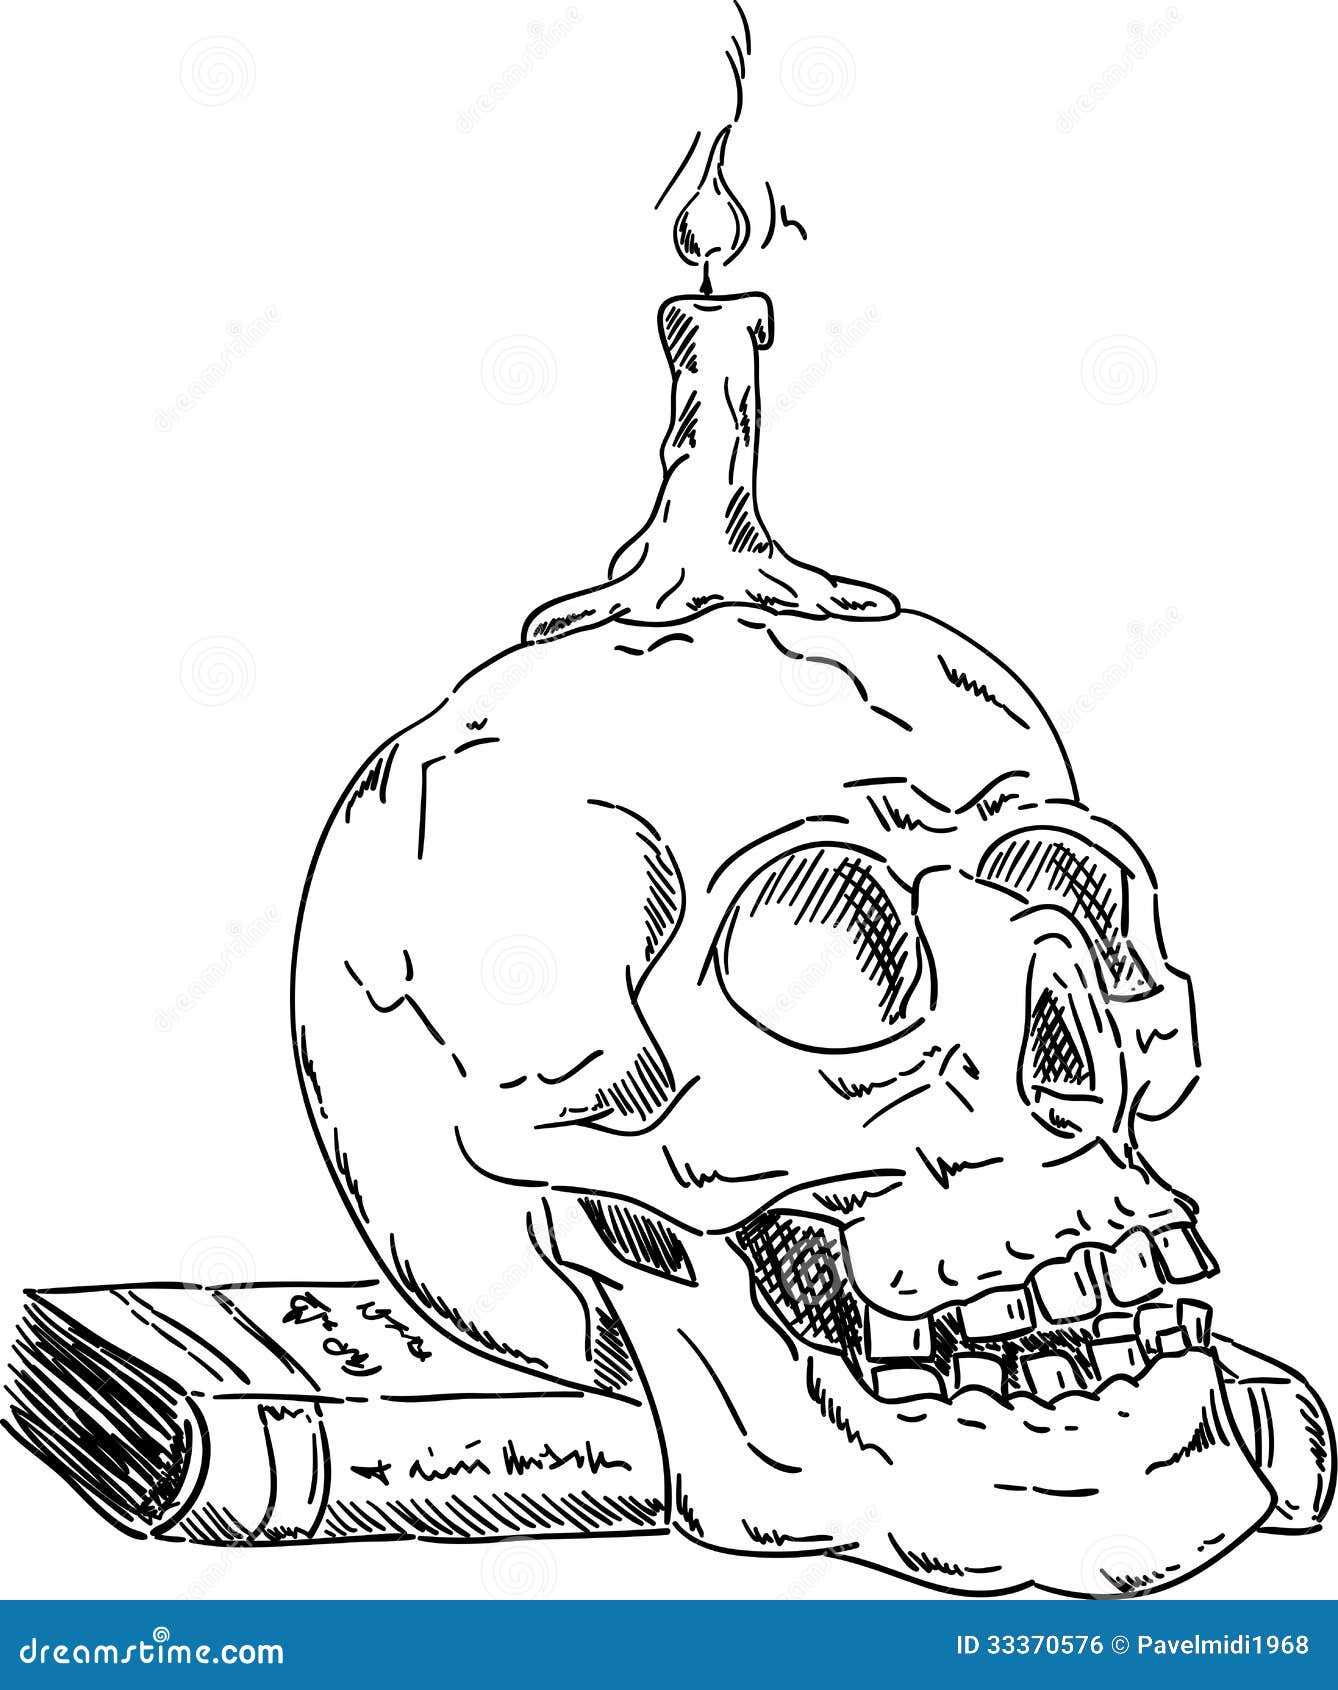 Halloween Skull Royalty Free Stock Image - Image: 33370576